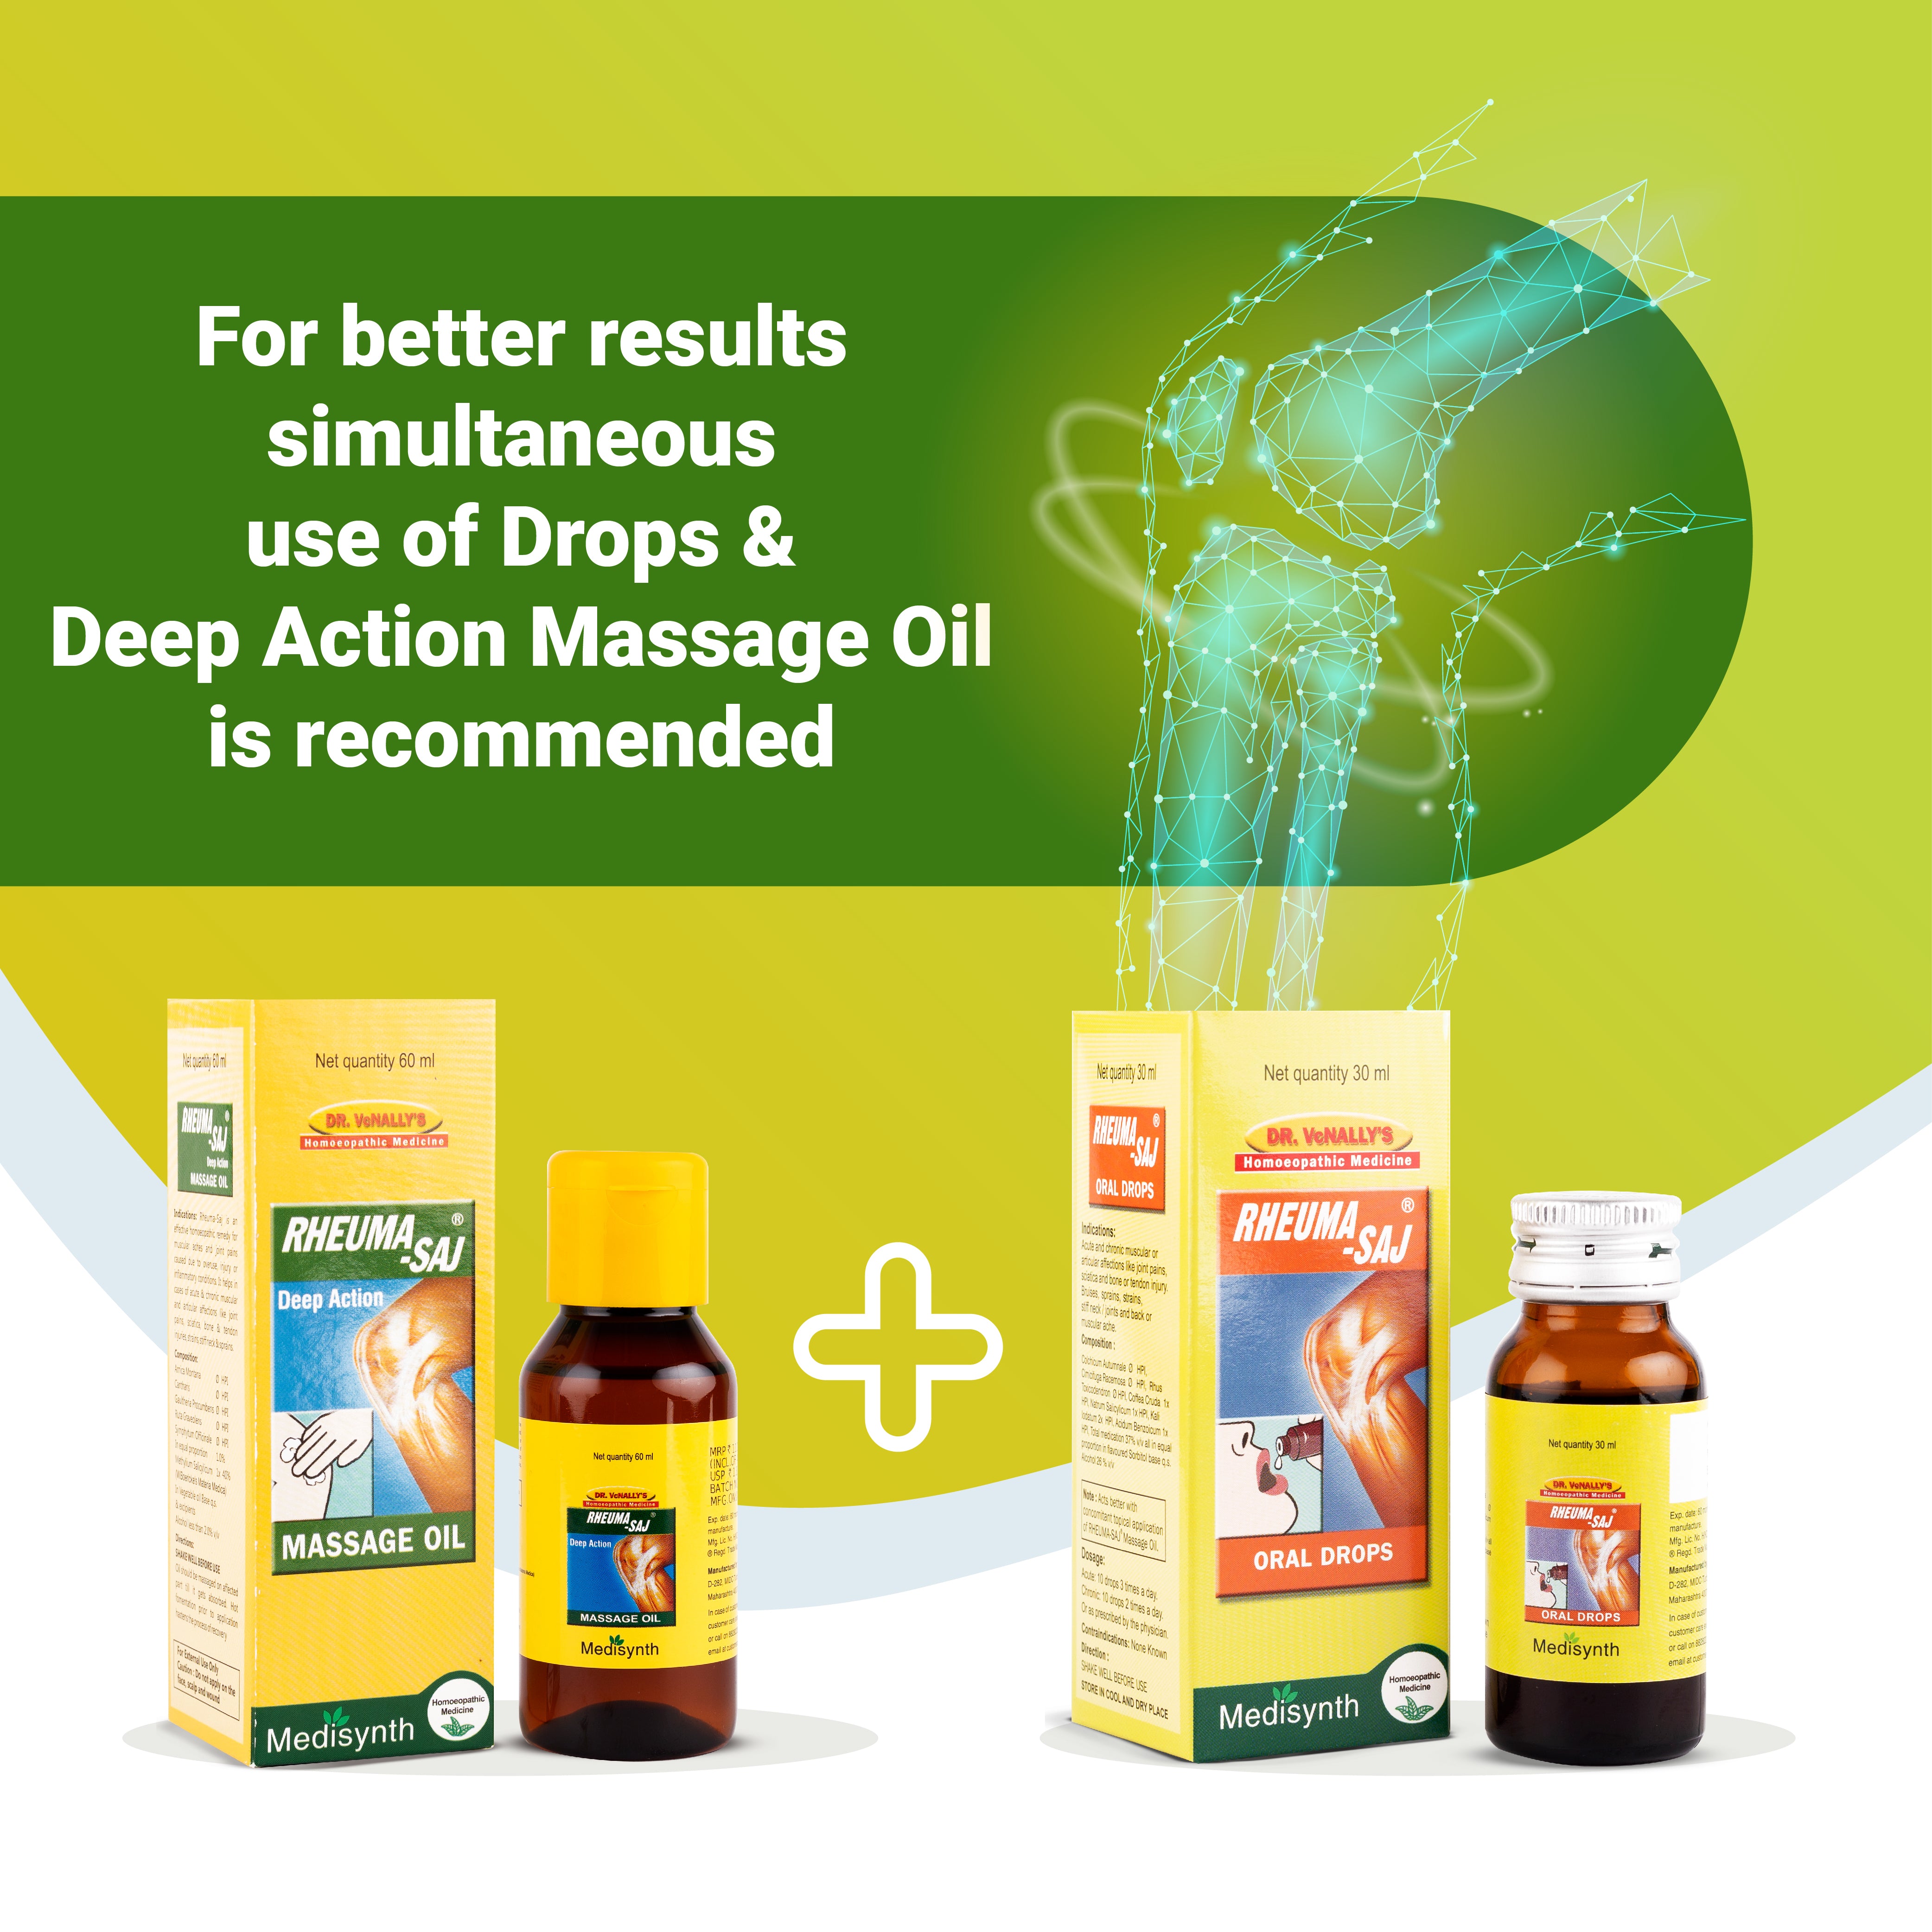 Rheumasaj Deep Action oil